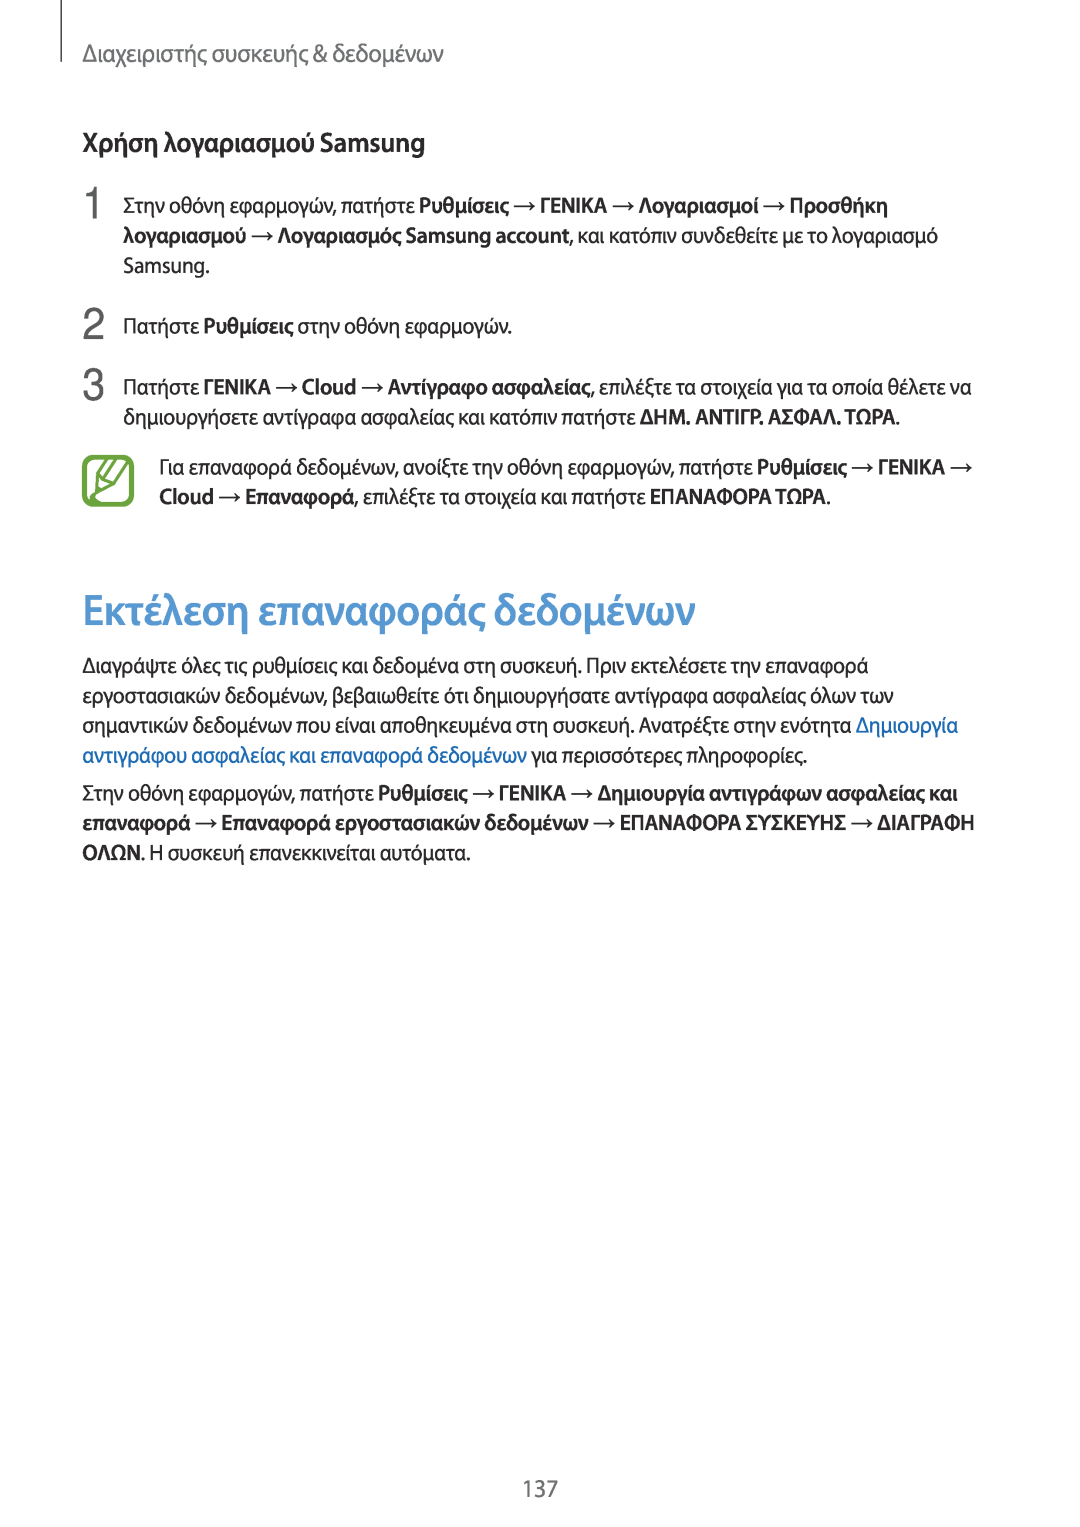 Samsung SM-T705NZWAEUR manual Εκτέλεση επαναφοράς δεδομένων, Χρήση λογαριασμού Samsung, Διαχειριστής συσκευής & δεδομένων 